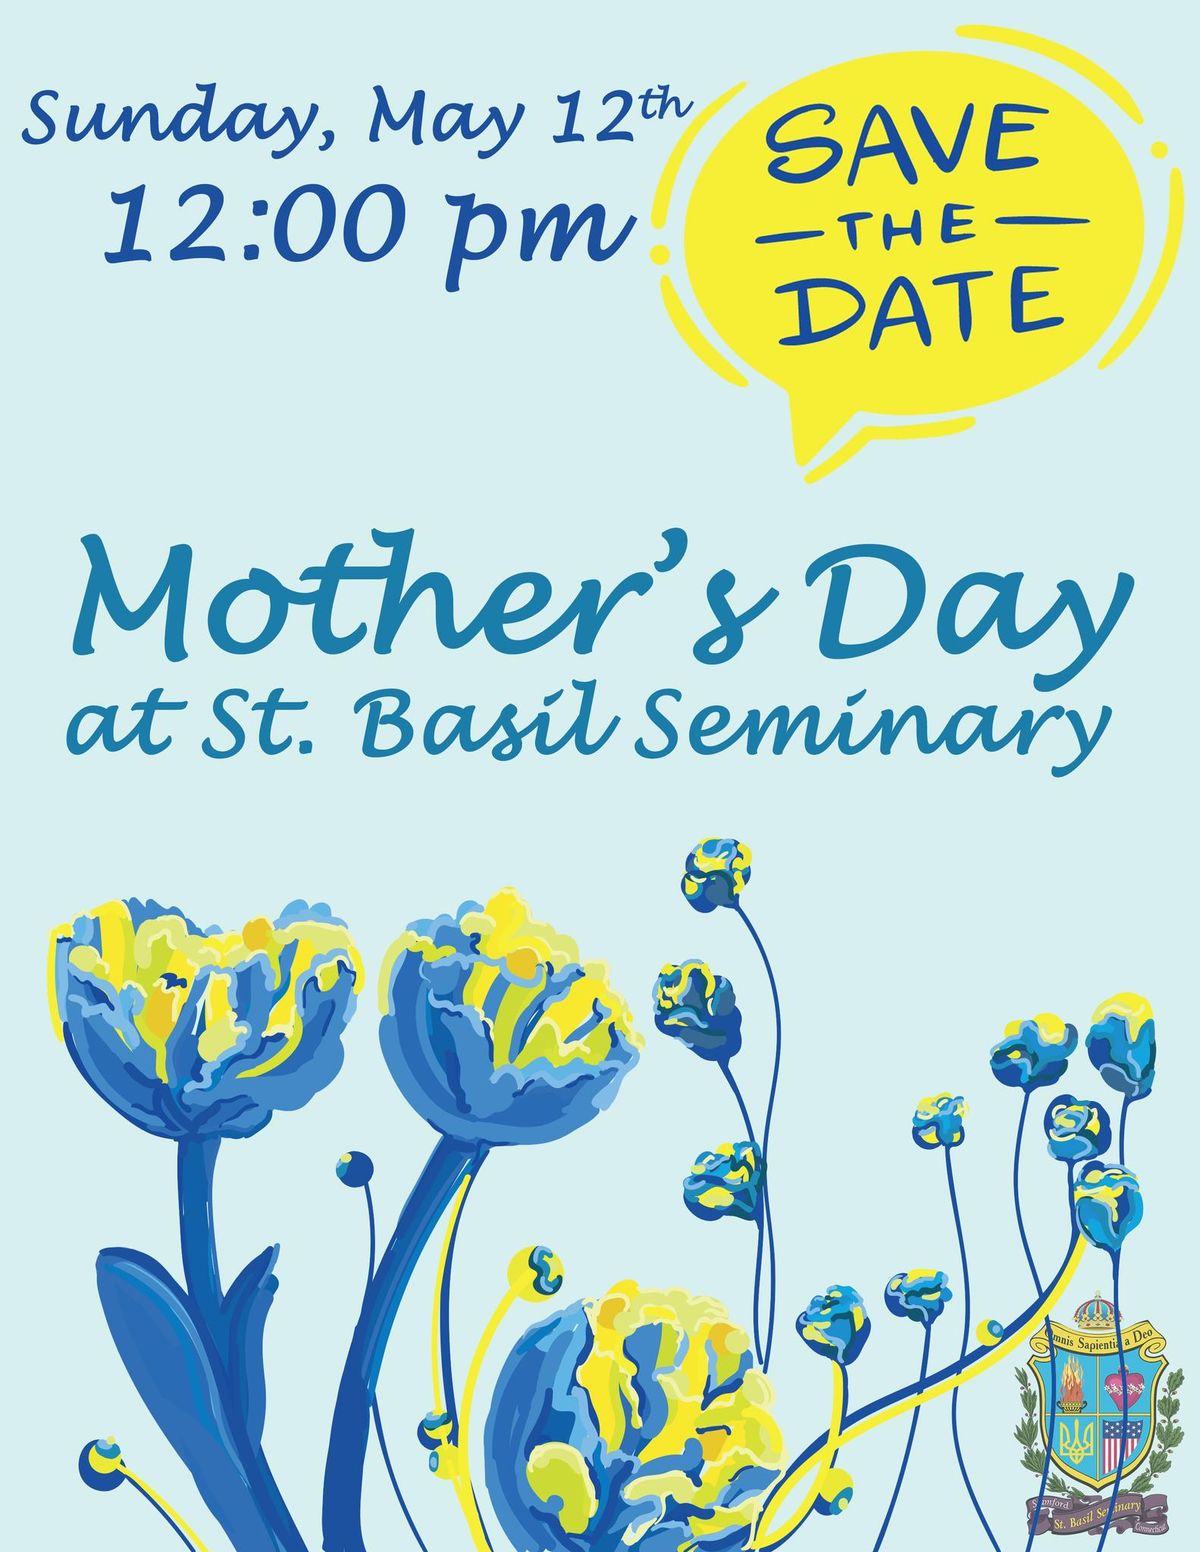 Mother's Day at St. Basil Seminary